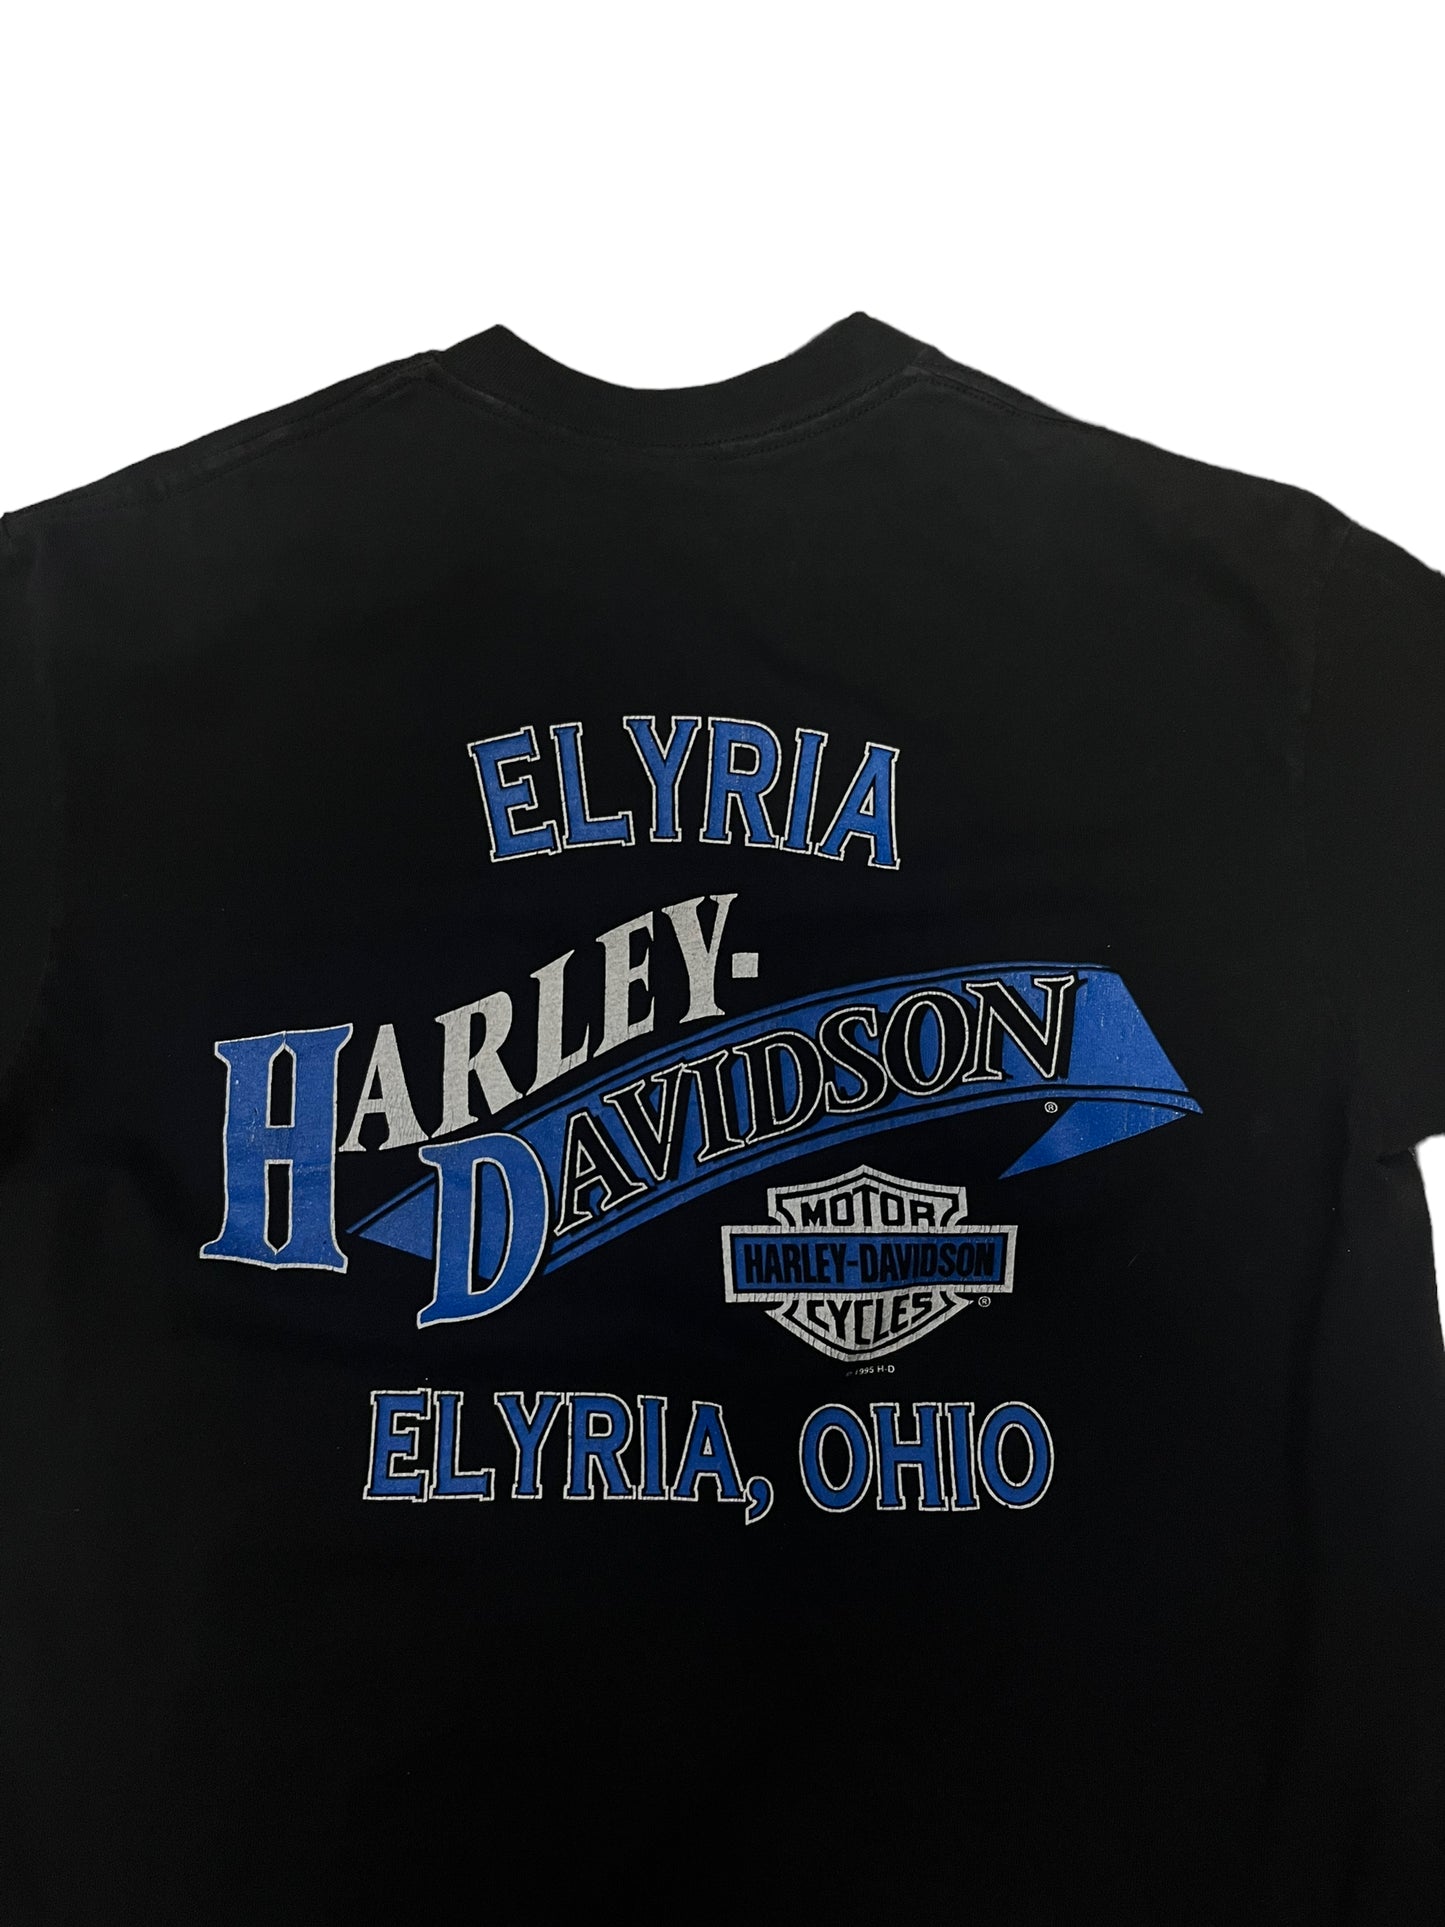 (M) 1995 Harley Davidson Elyria Ohio Double Sided Pocket Tee